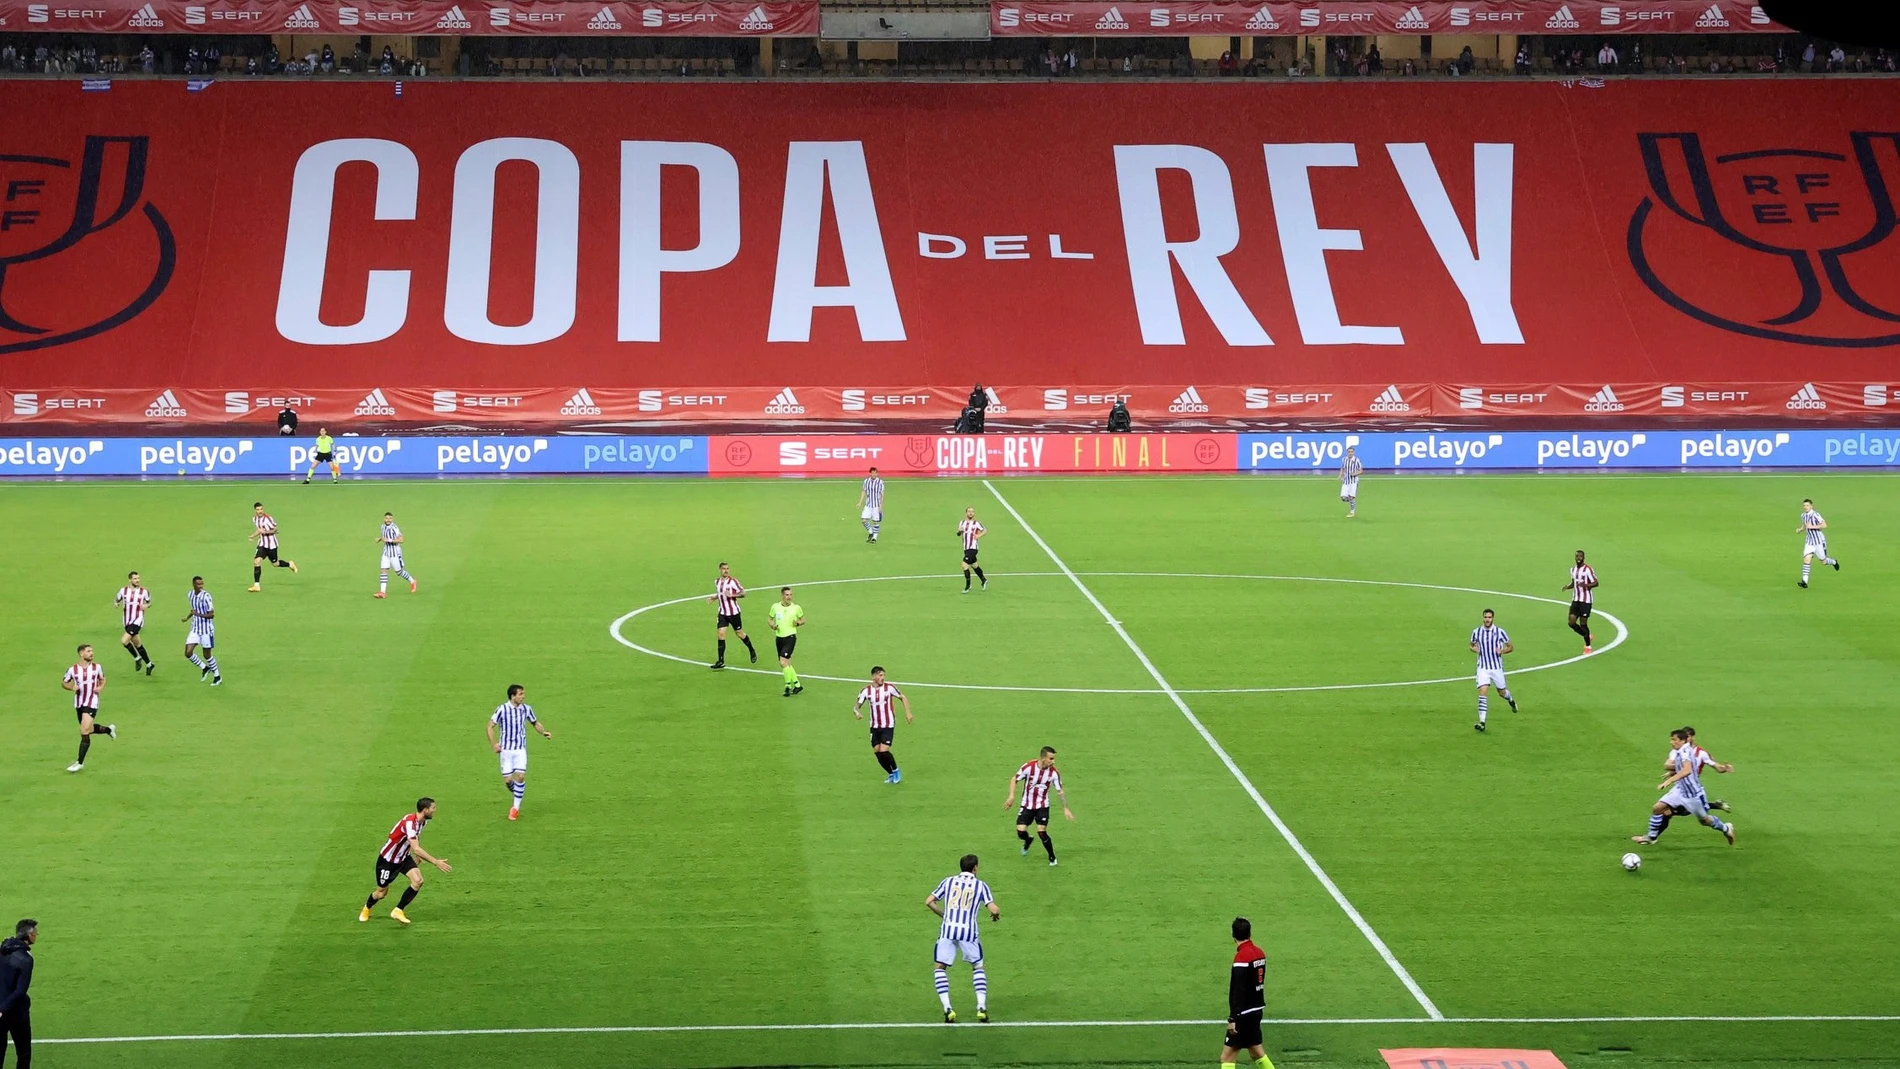 La Cartuja sede de la final de la Copa del Rey se postula como alternativa a Bilbao